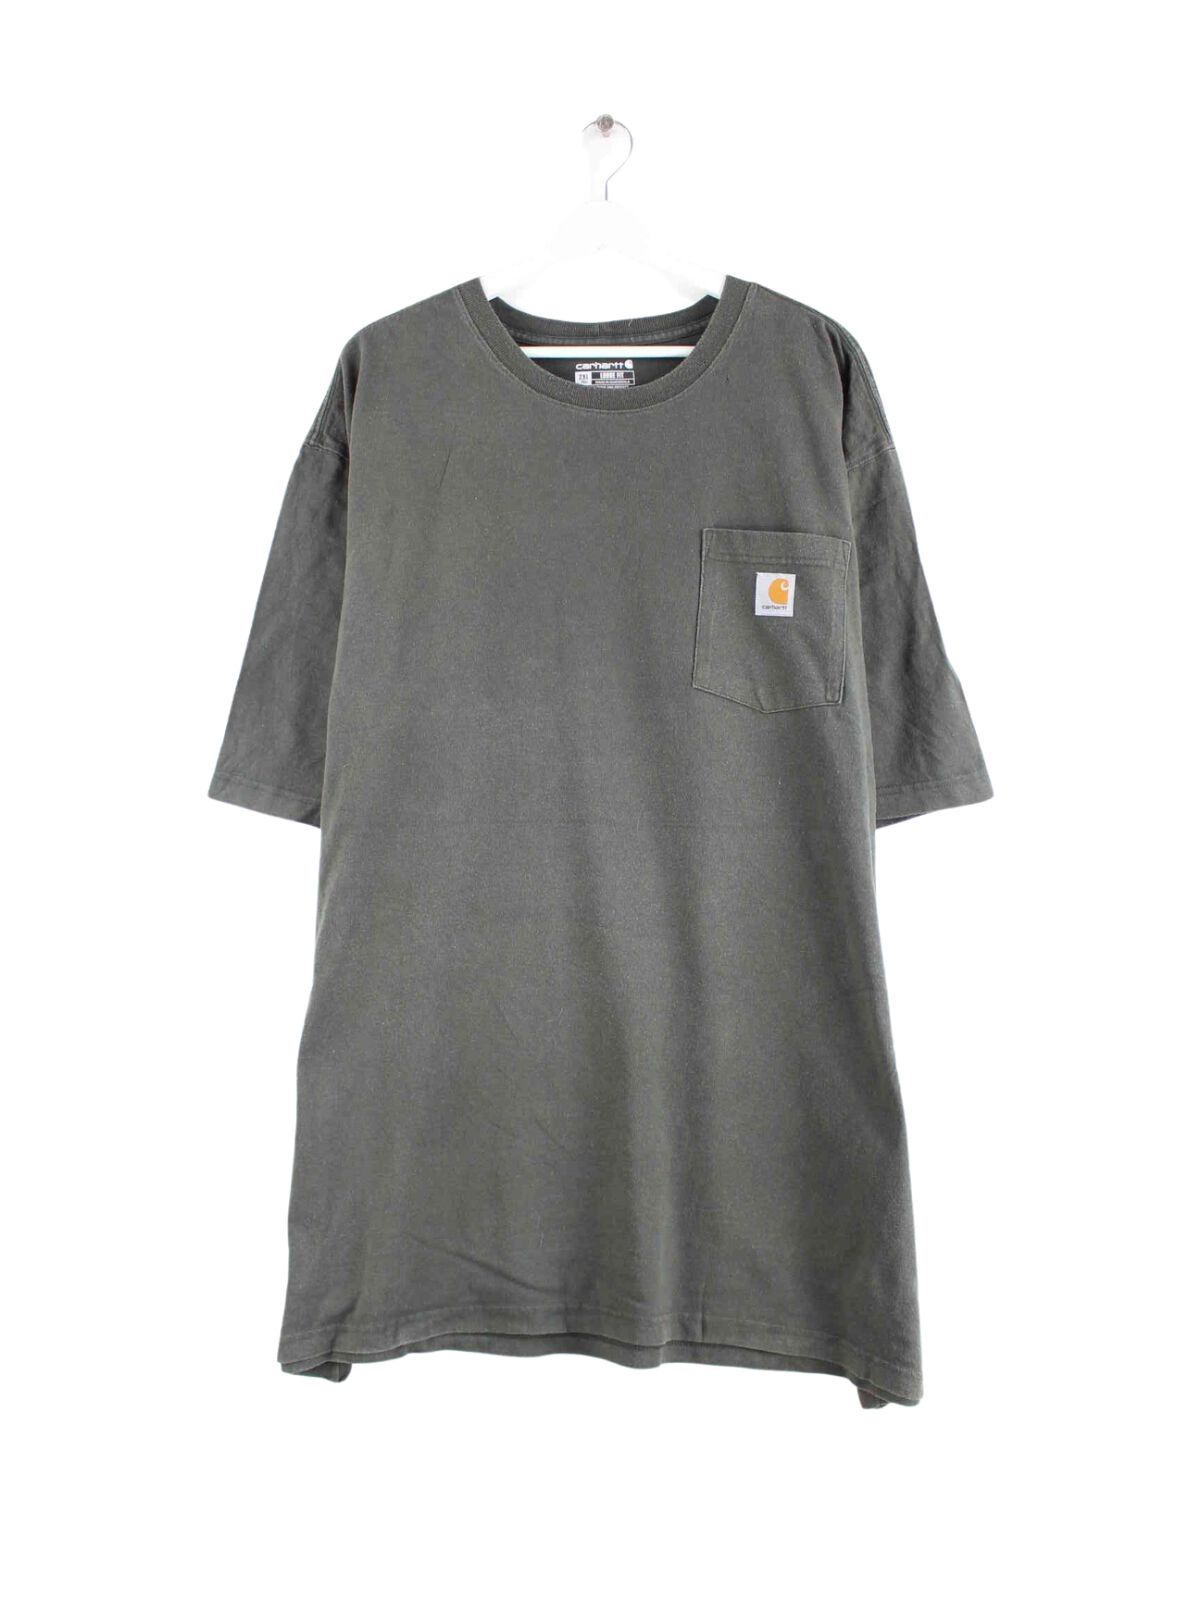 Carhartt Loose Fit T-Shirt Grün XXL (front image)